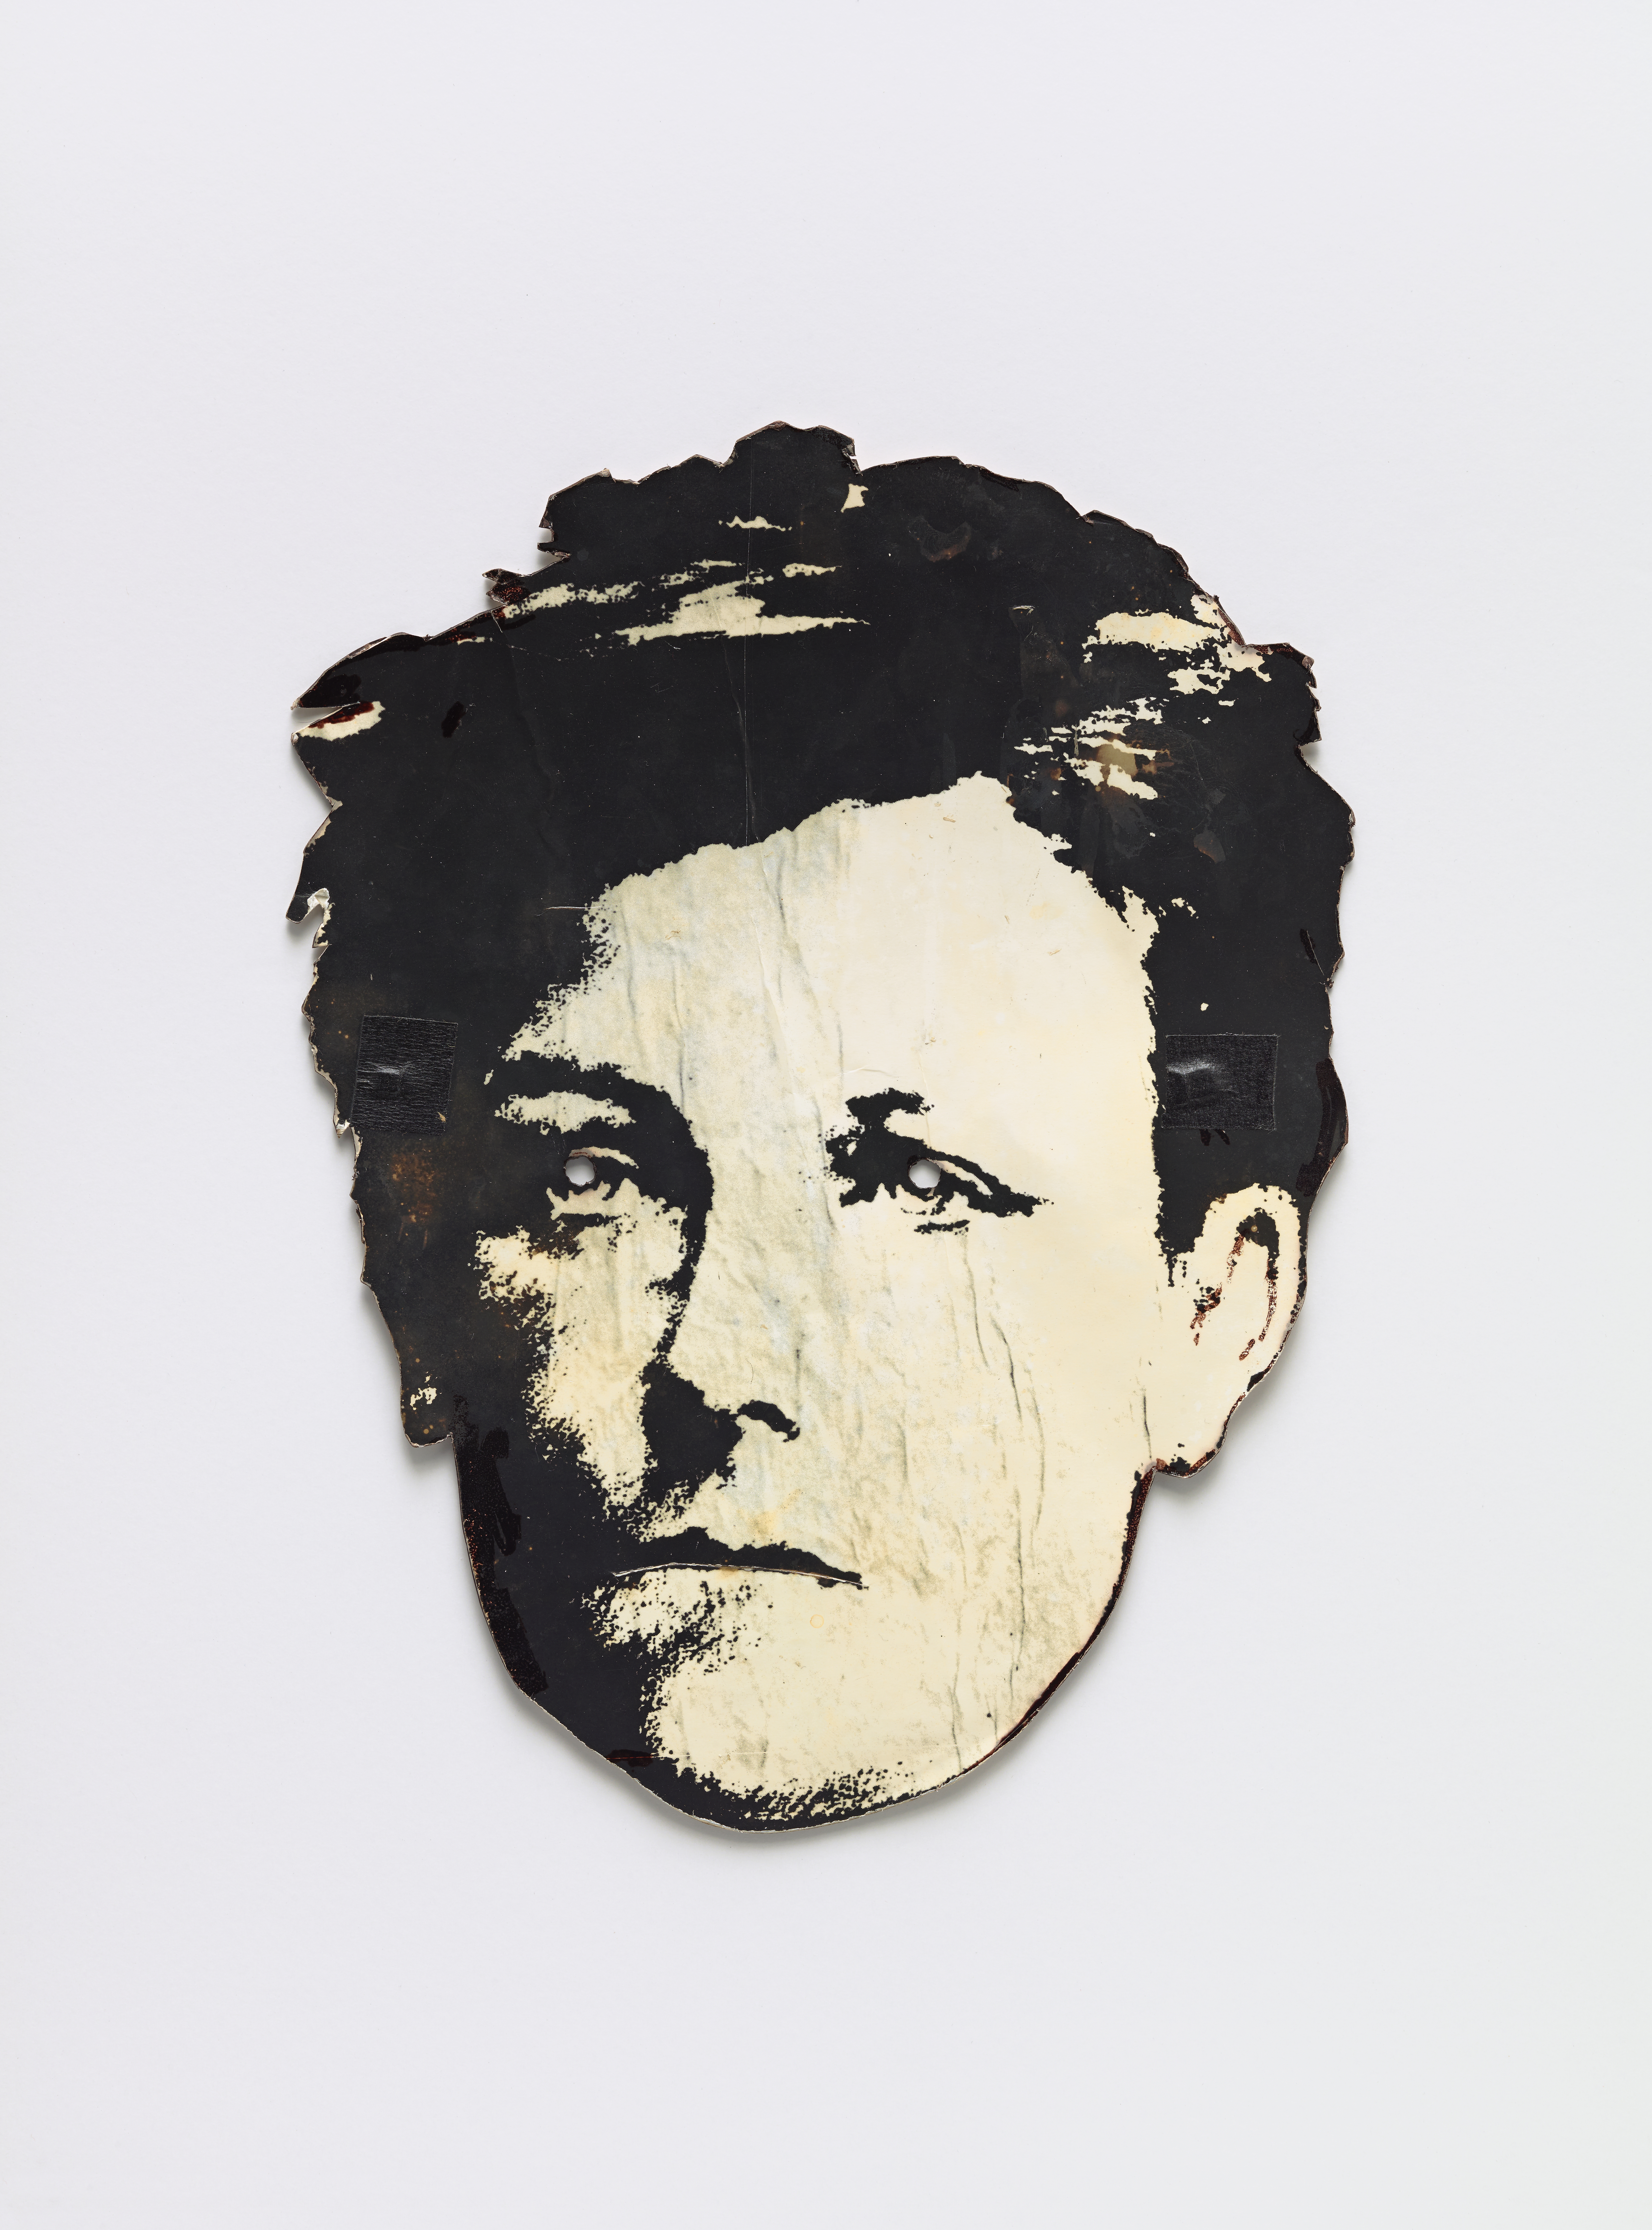 David Wojnarowicz , Rimbaud mask, c. 1978. Courtesy the Fales Library and Special Collections, New York University, NY, USA.